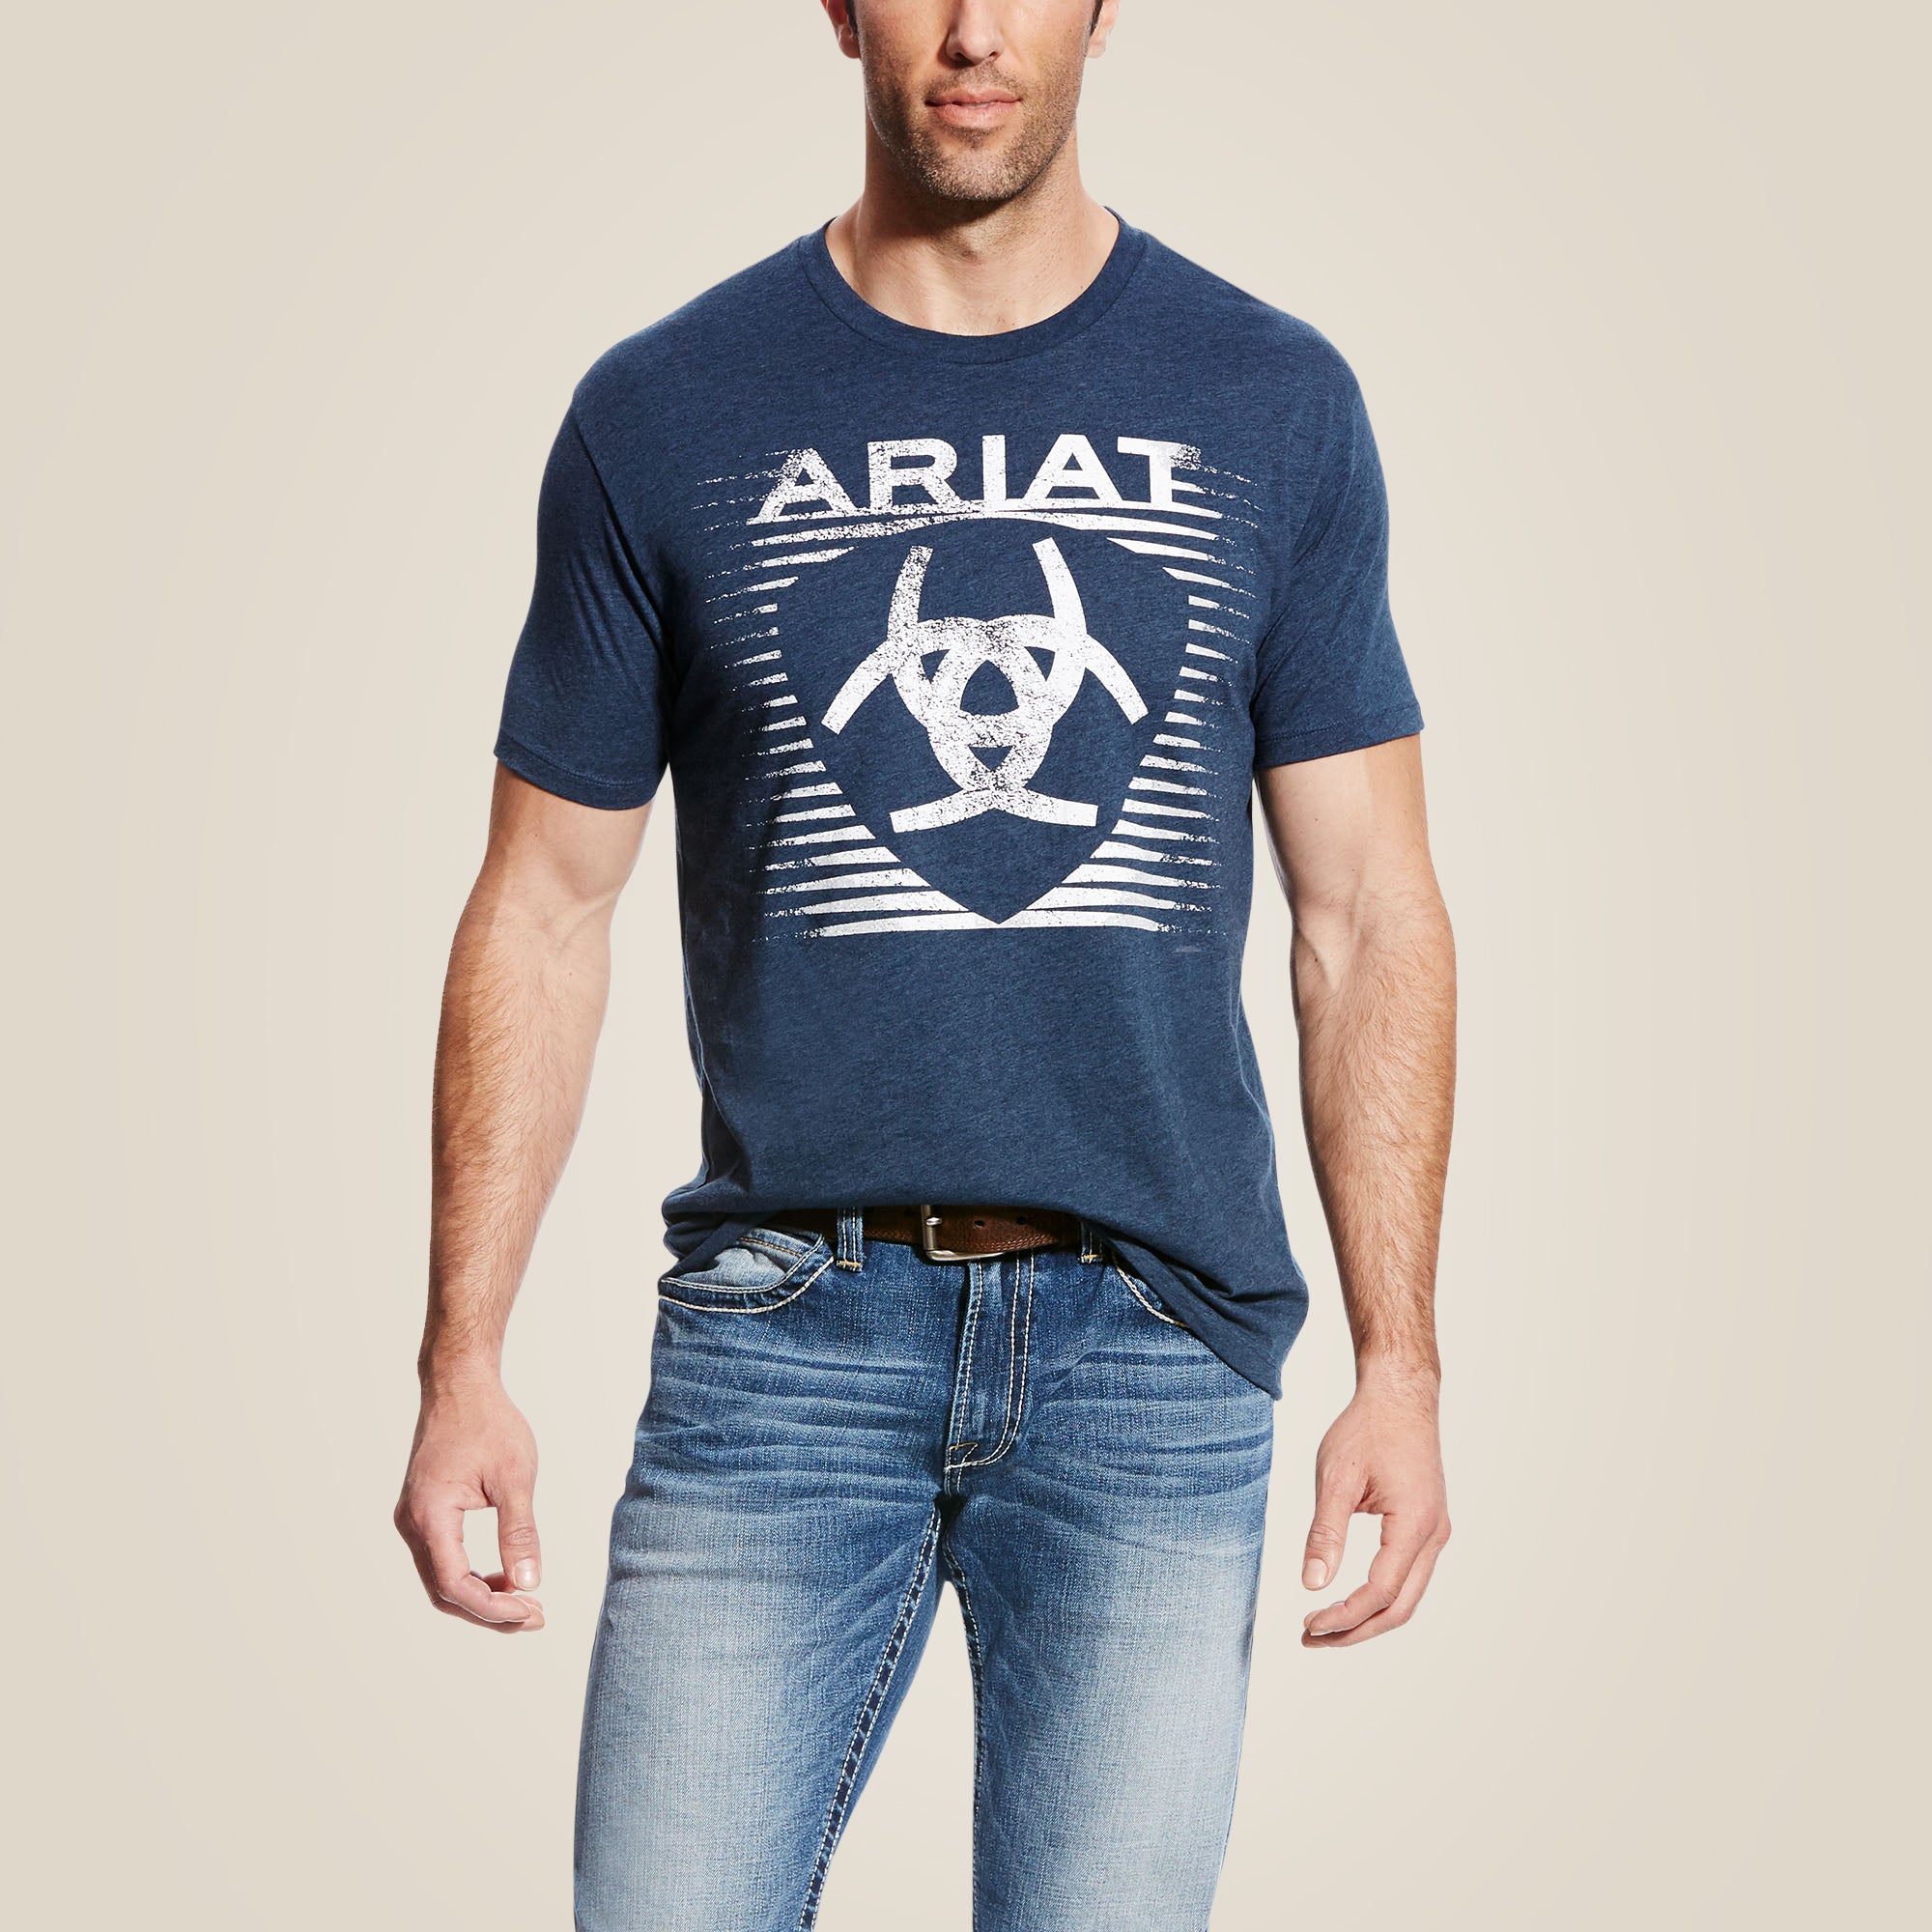 Ariat Men's Shade Tee T-Shirt, Navy Heather